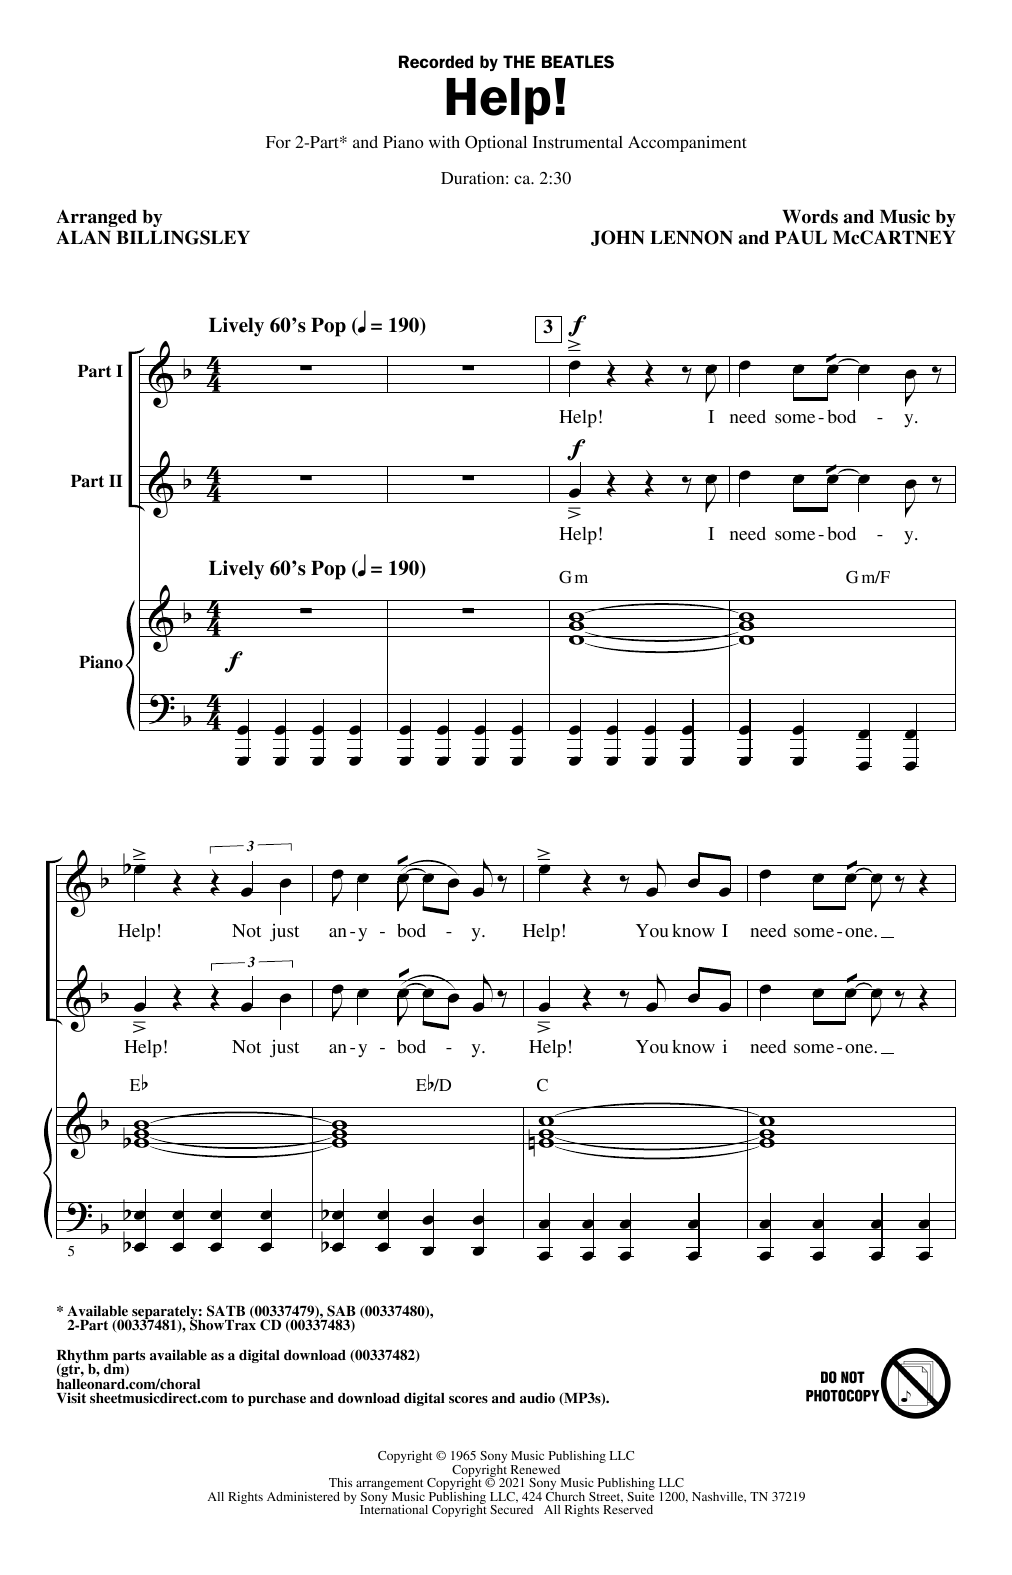 The Beatles Help! (arr. Alan Billingsley) Sheet Music Notes & Chords for SATB Choir - Download or Print PDF